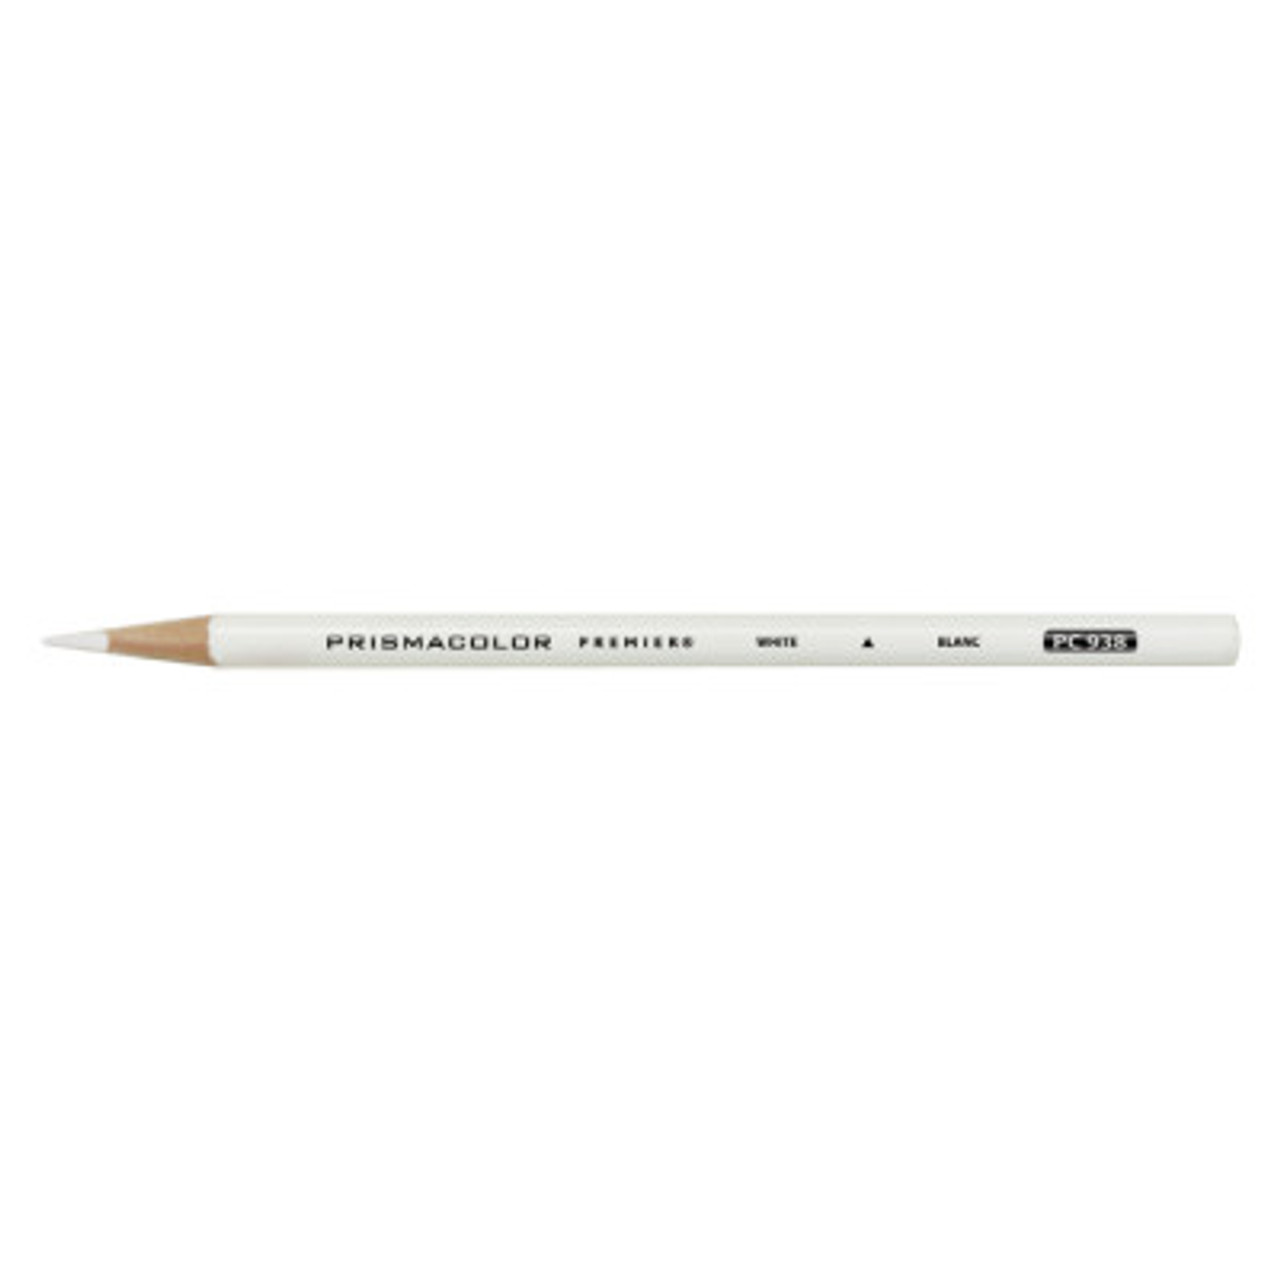 Prismacolor Premier Verithin Colored Pencil (2450)